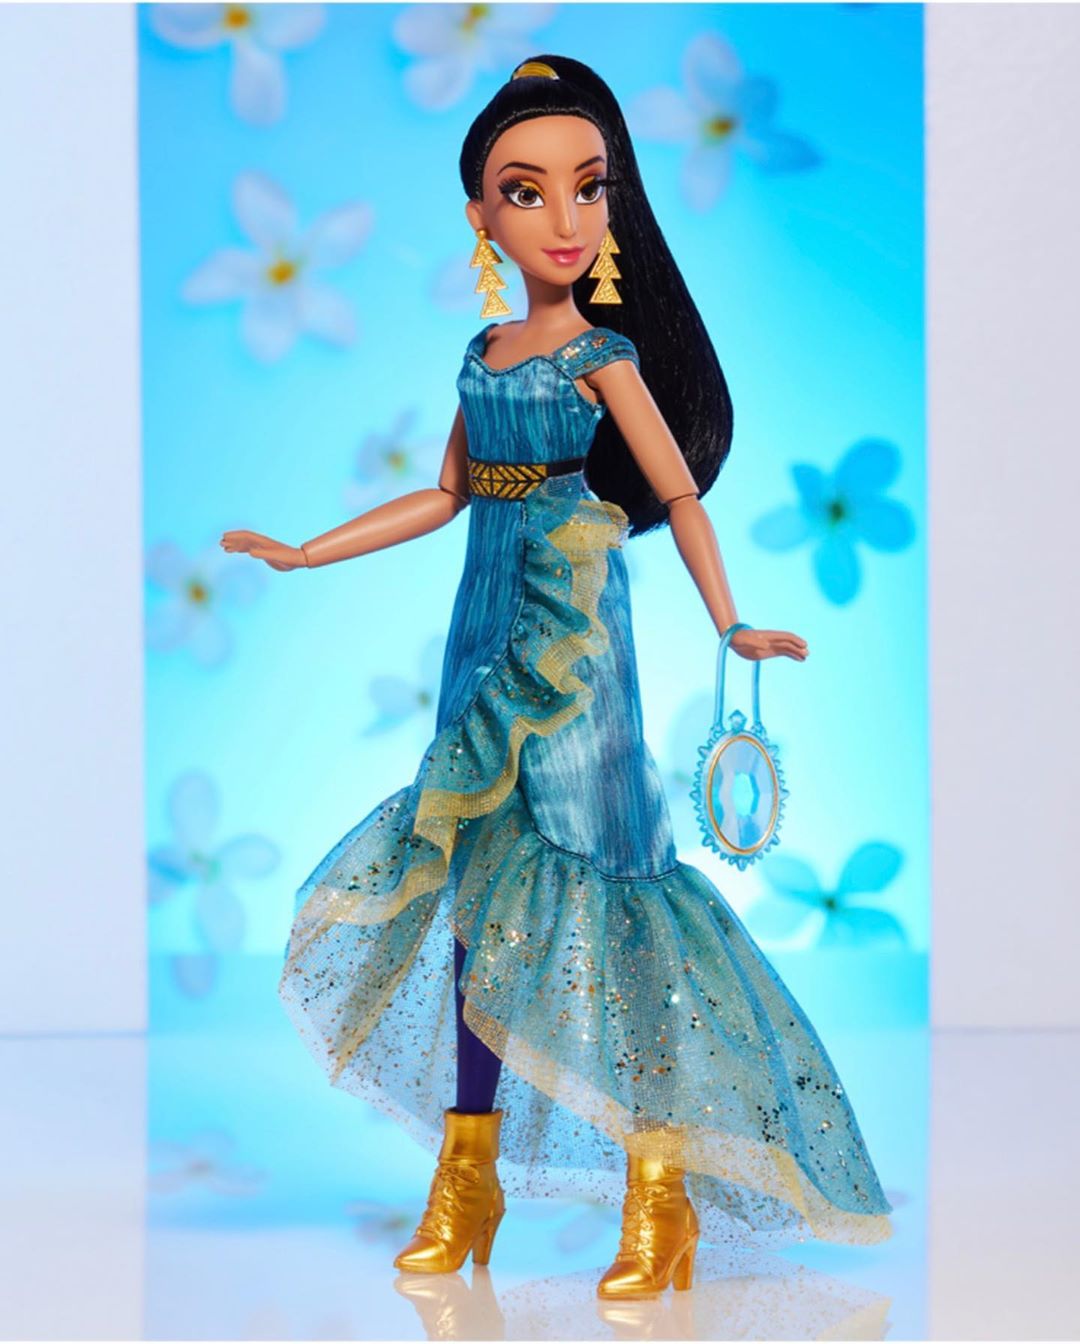 Promo images of Princess Jasmine and Aurora Style Series